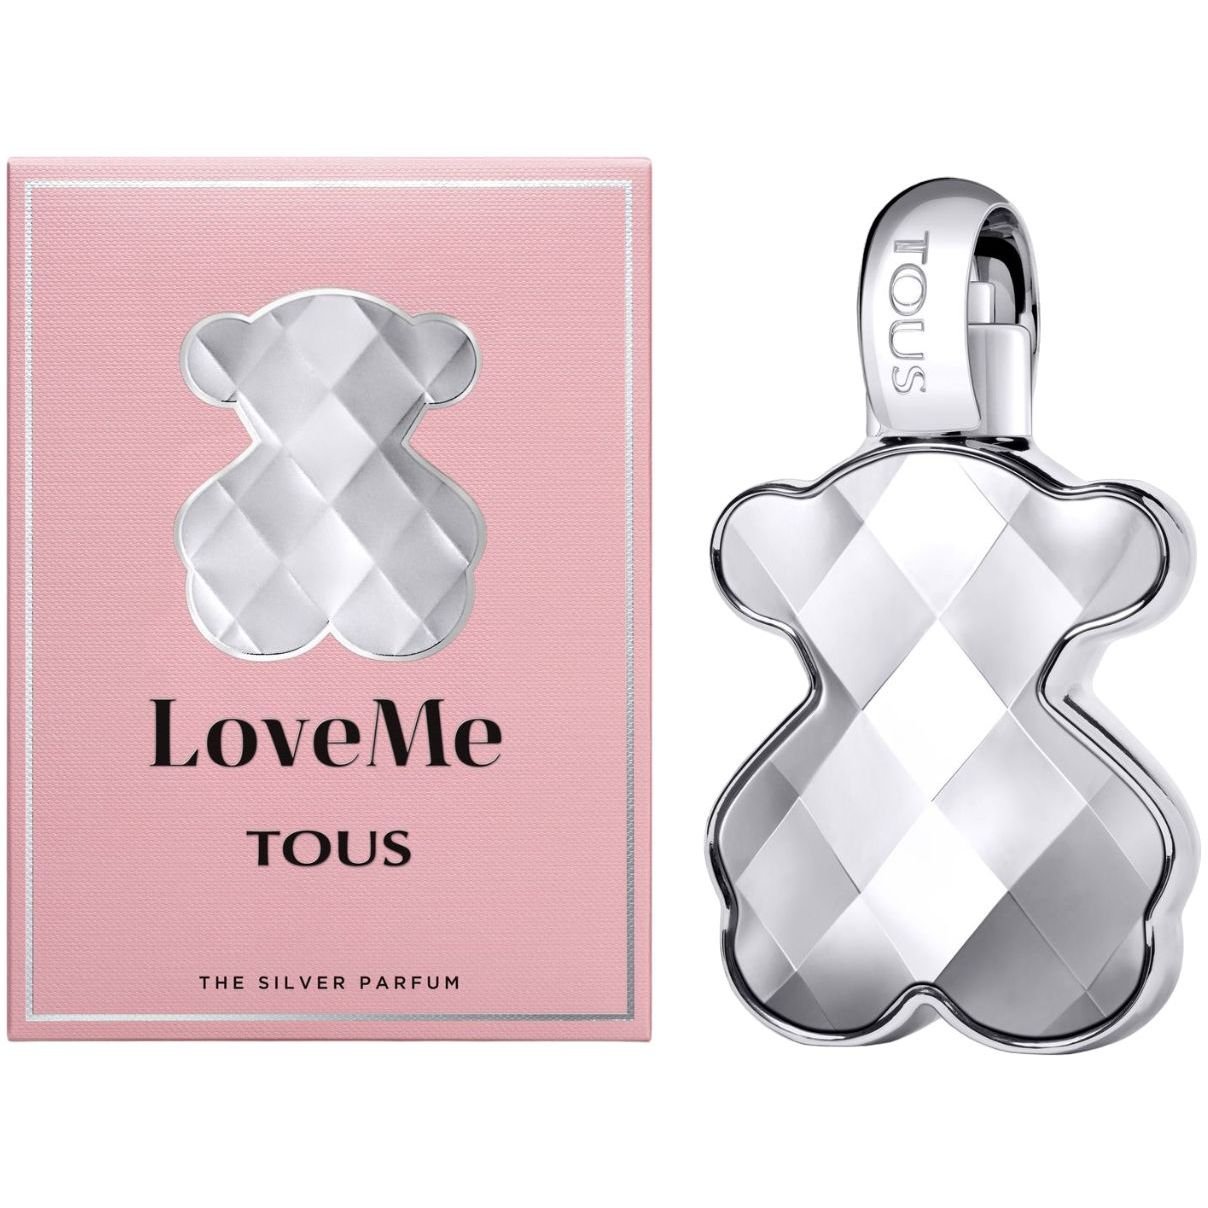 Парфюмированная вода для женщин Tous LoveMe The Silver Parfum, 50 мл - фото 1